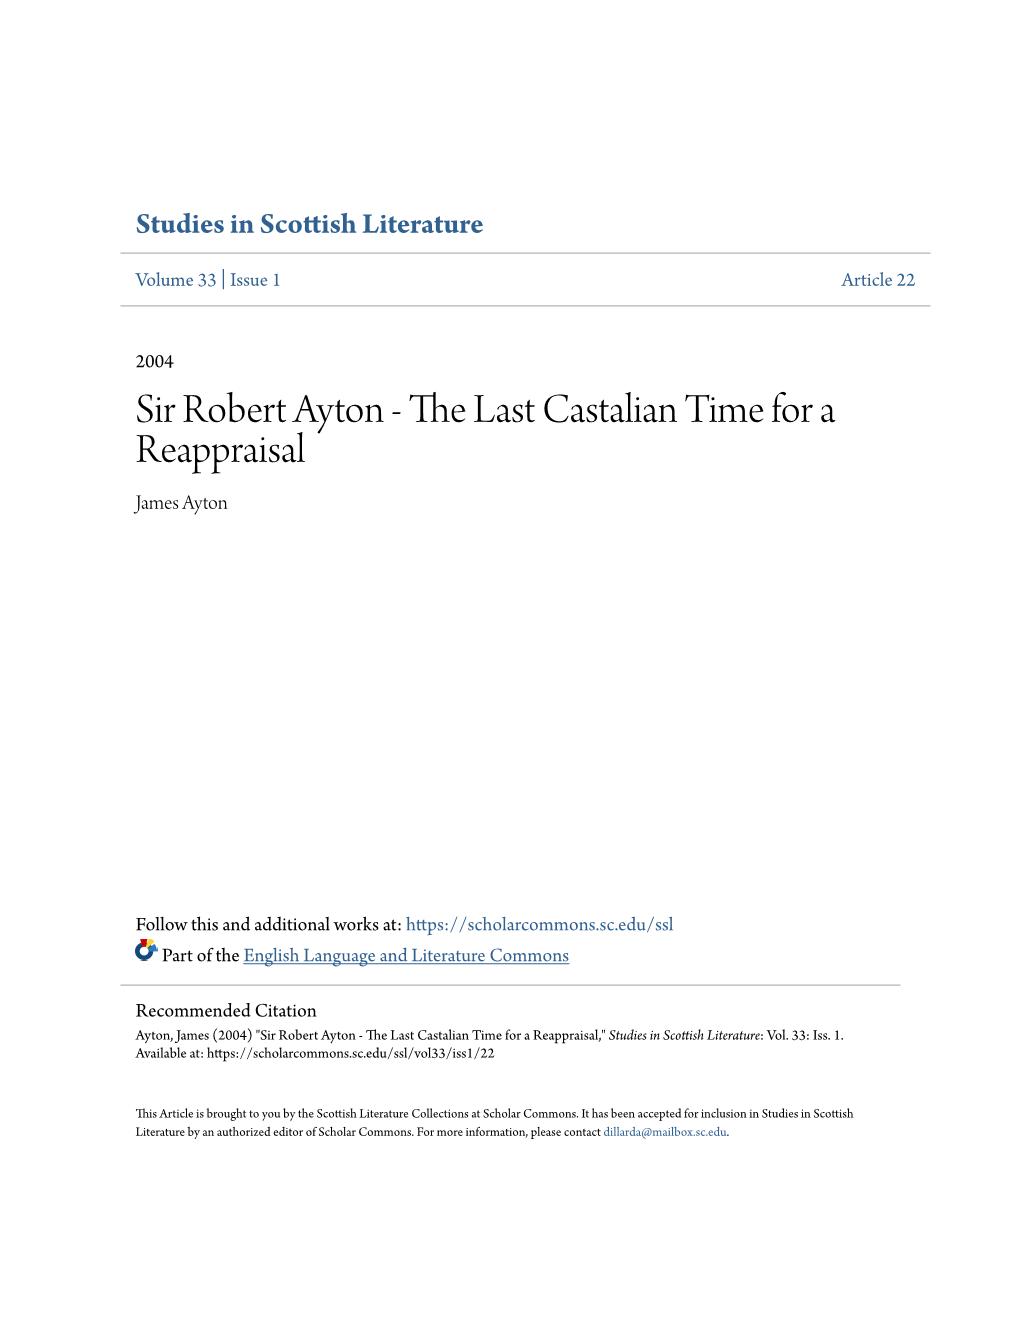 Sir Robert Ayton - the Last Castalian Time for a Reappraisal James Ayton